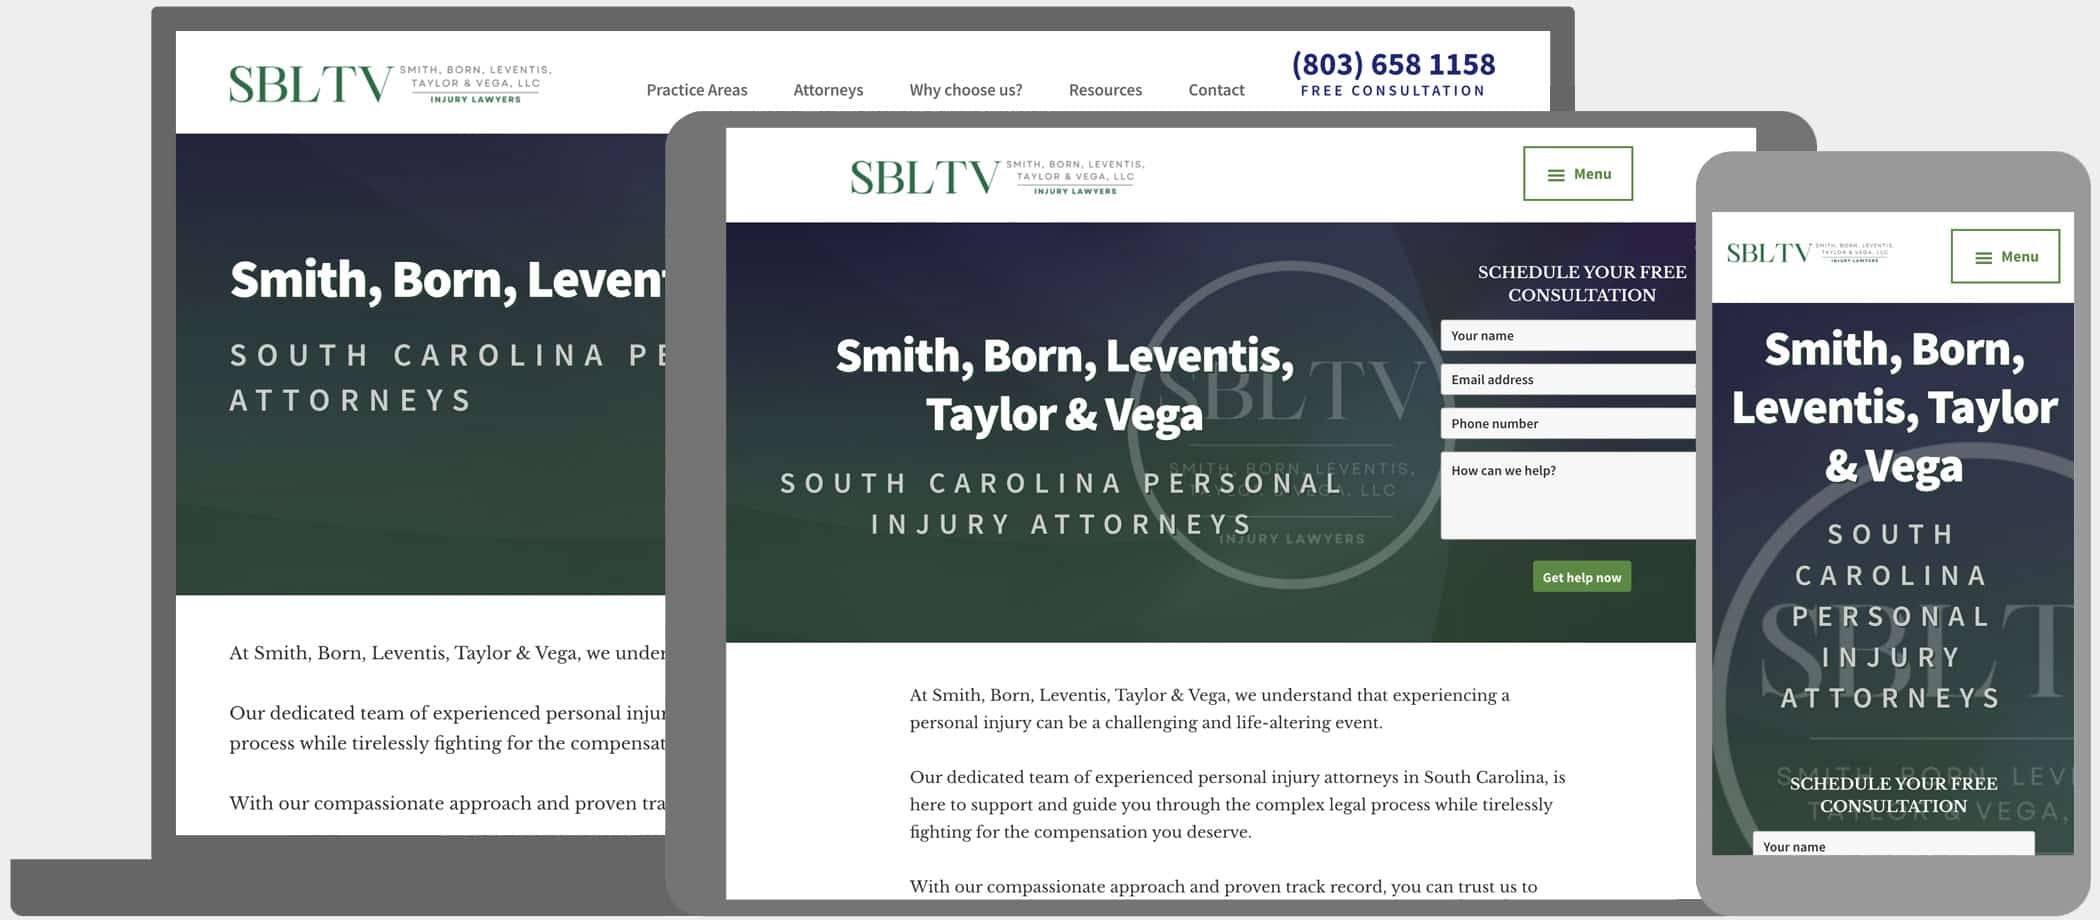 SEO Advantage Web Design Portfolio: Smith, Born, Leventis, Taylor & Vega